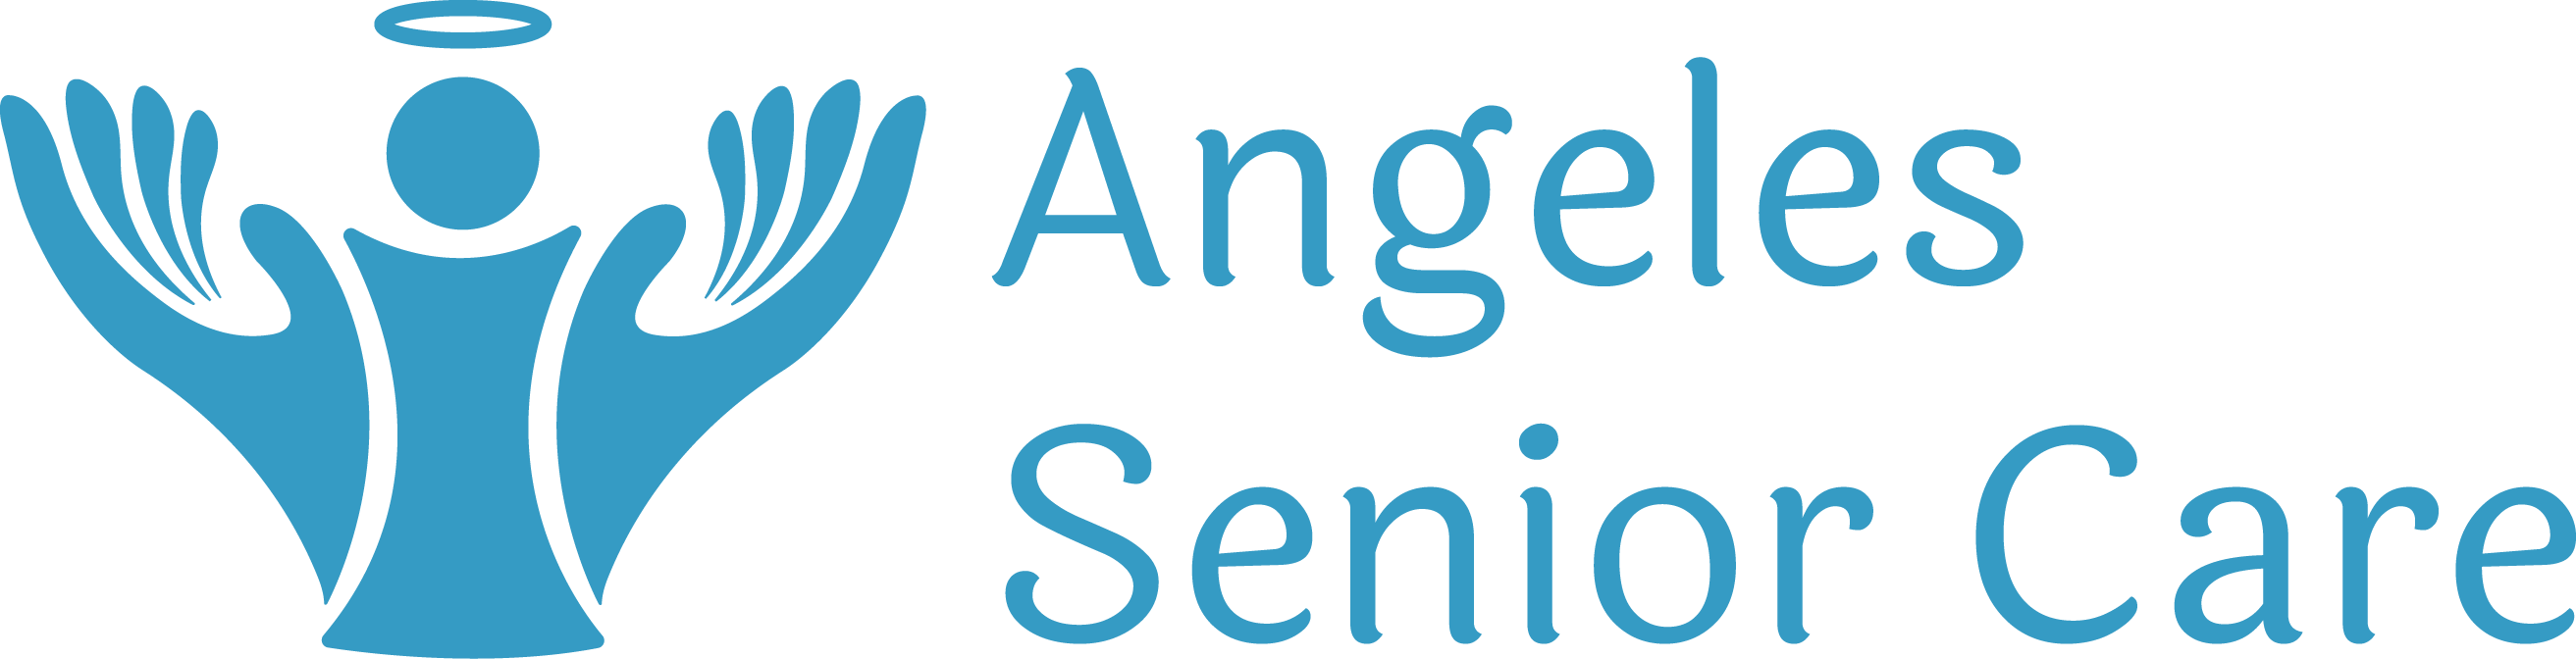 Angeles Senior Care